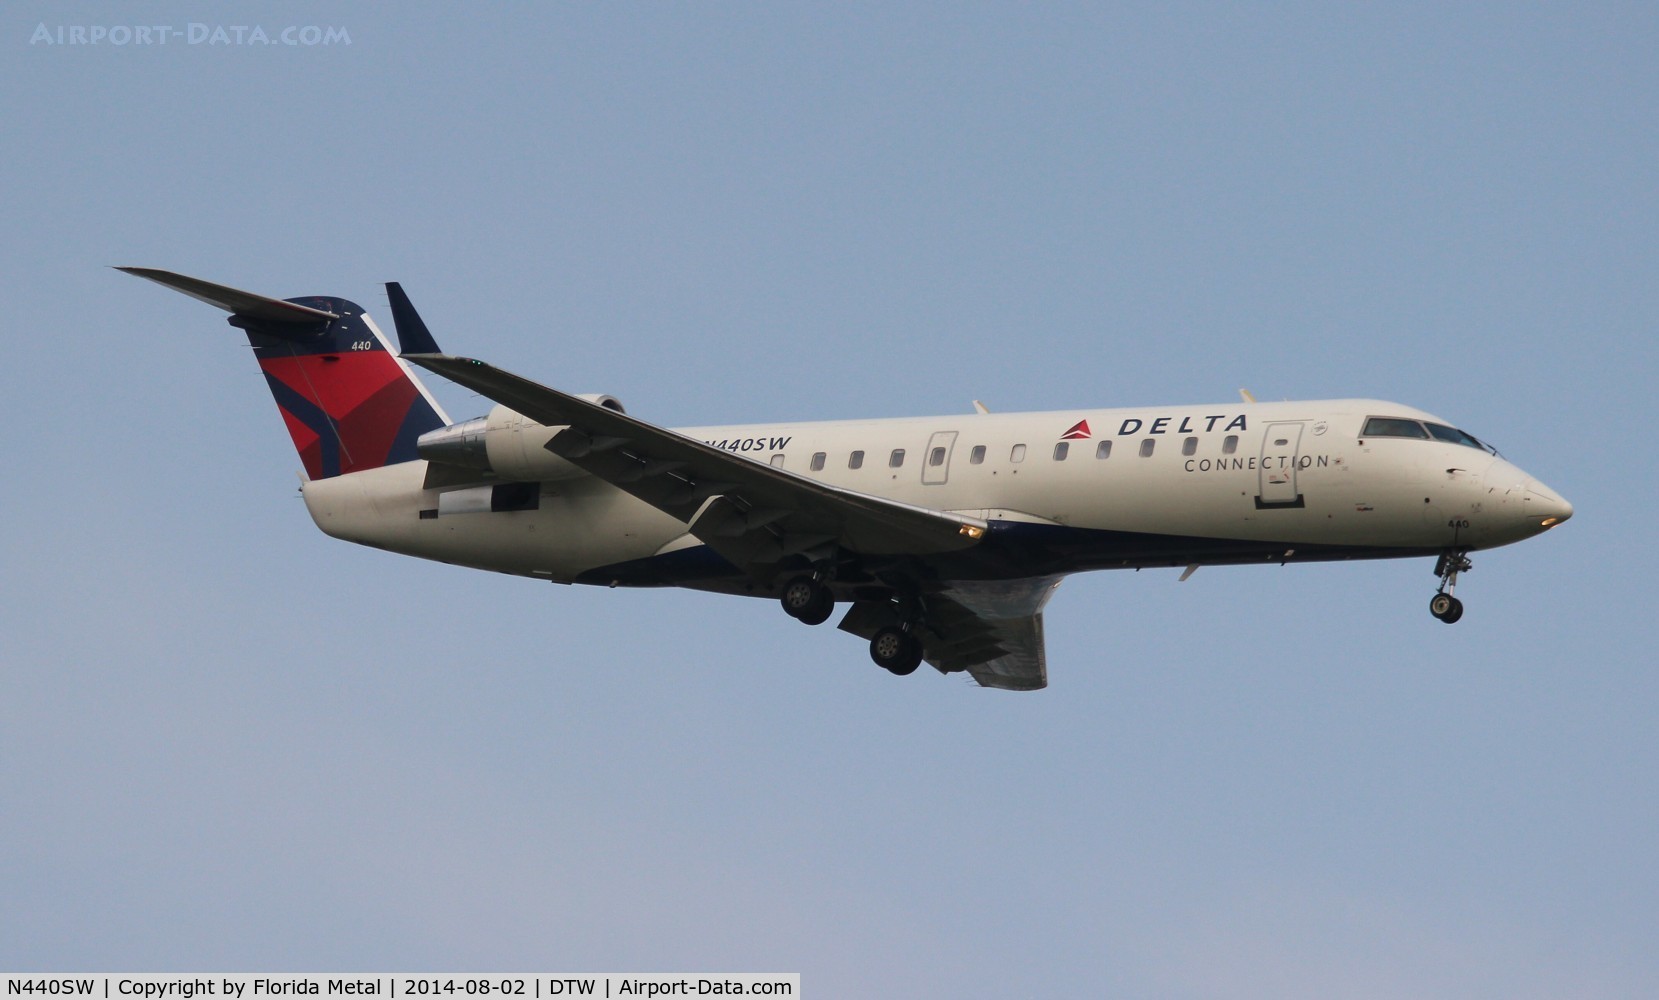 N440SW, 2001 Bombardier CRJ-200LR (CL-600-2B19) C/N 7589, Delta Connection